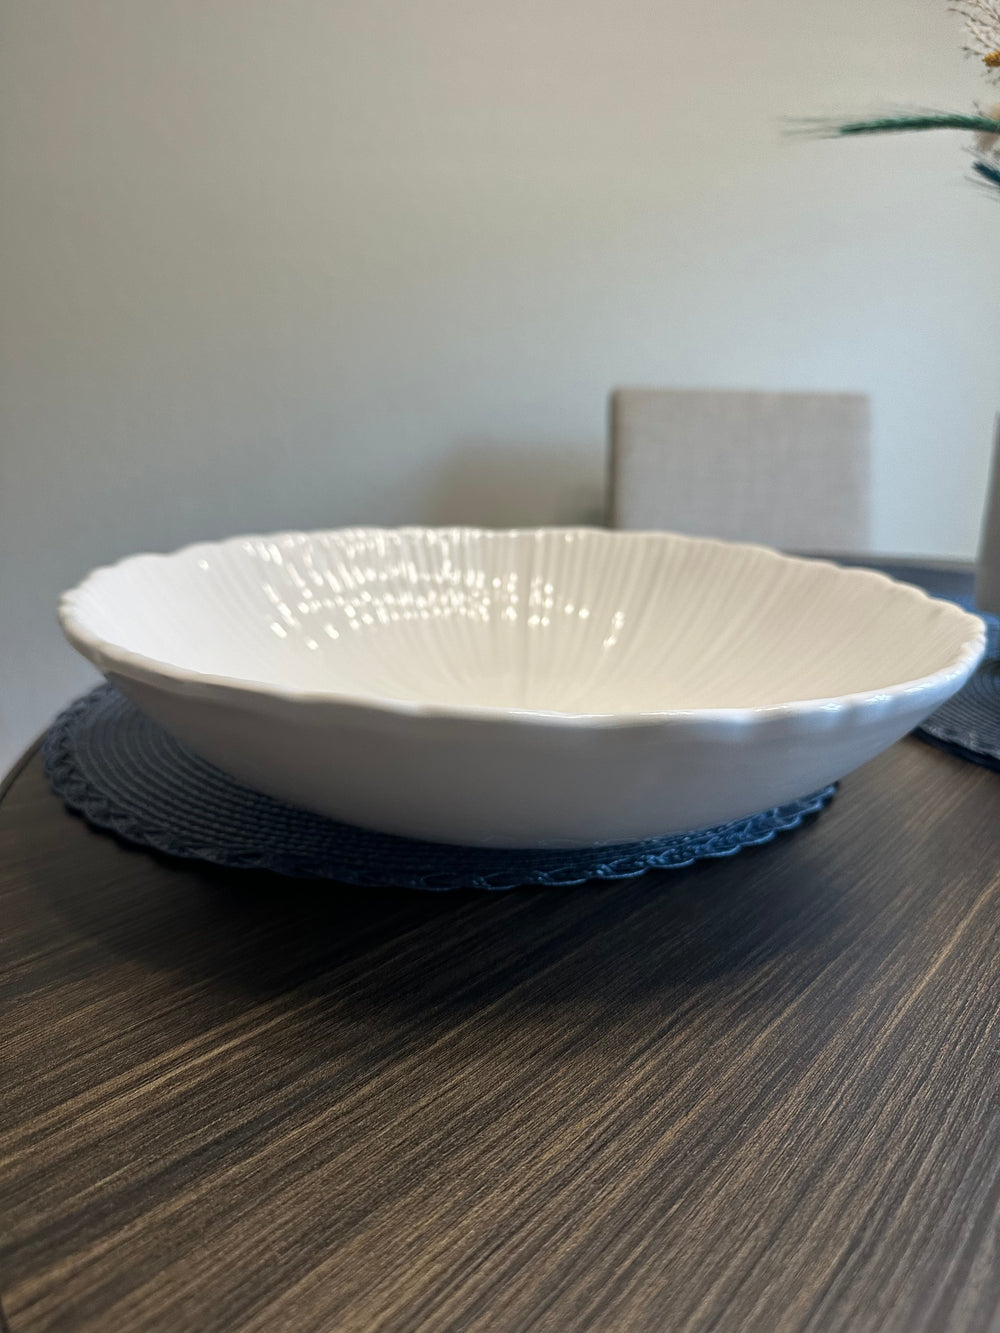 Made in Portugal White Ceramic Round Fruit Bowl Holder - Large